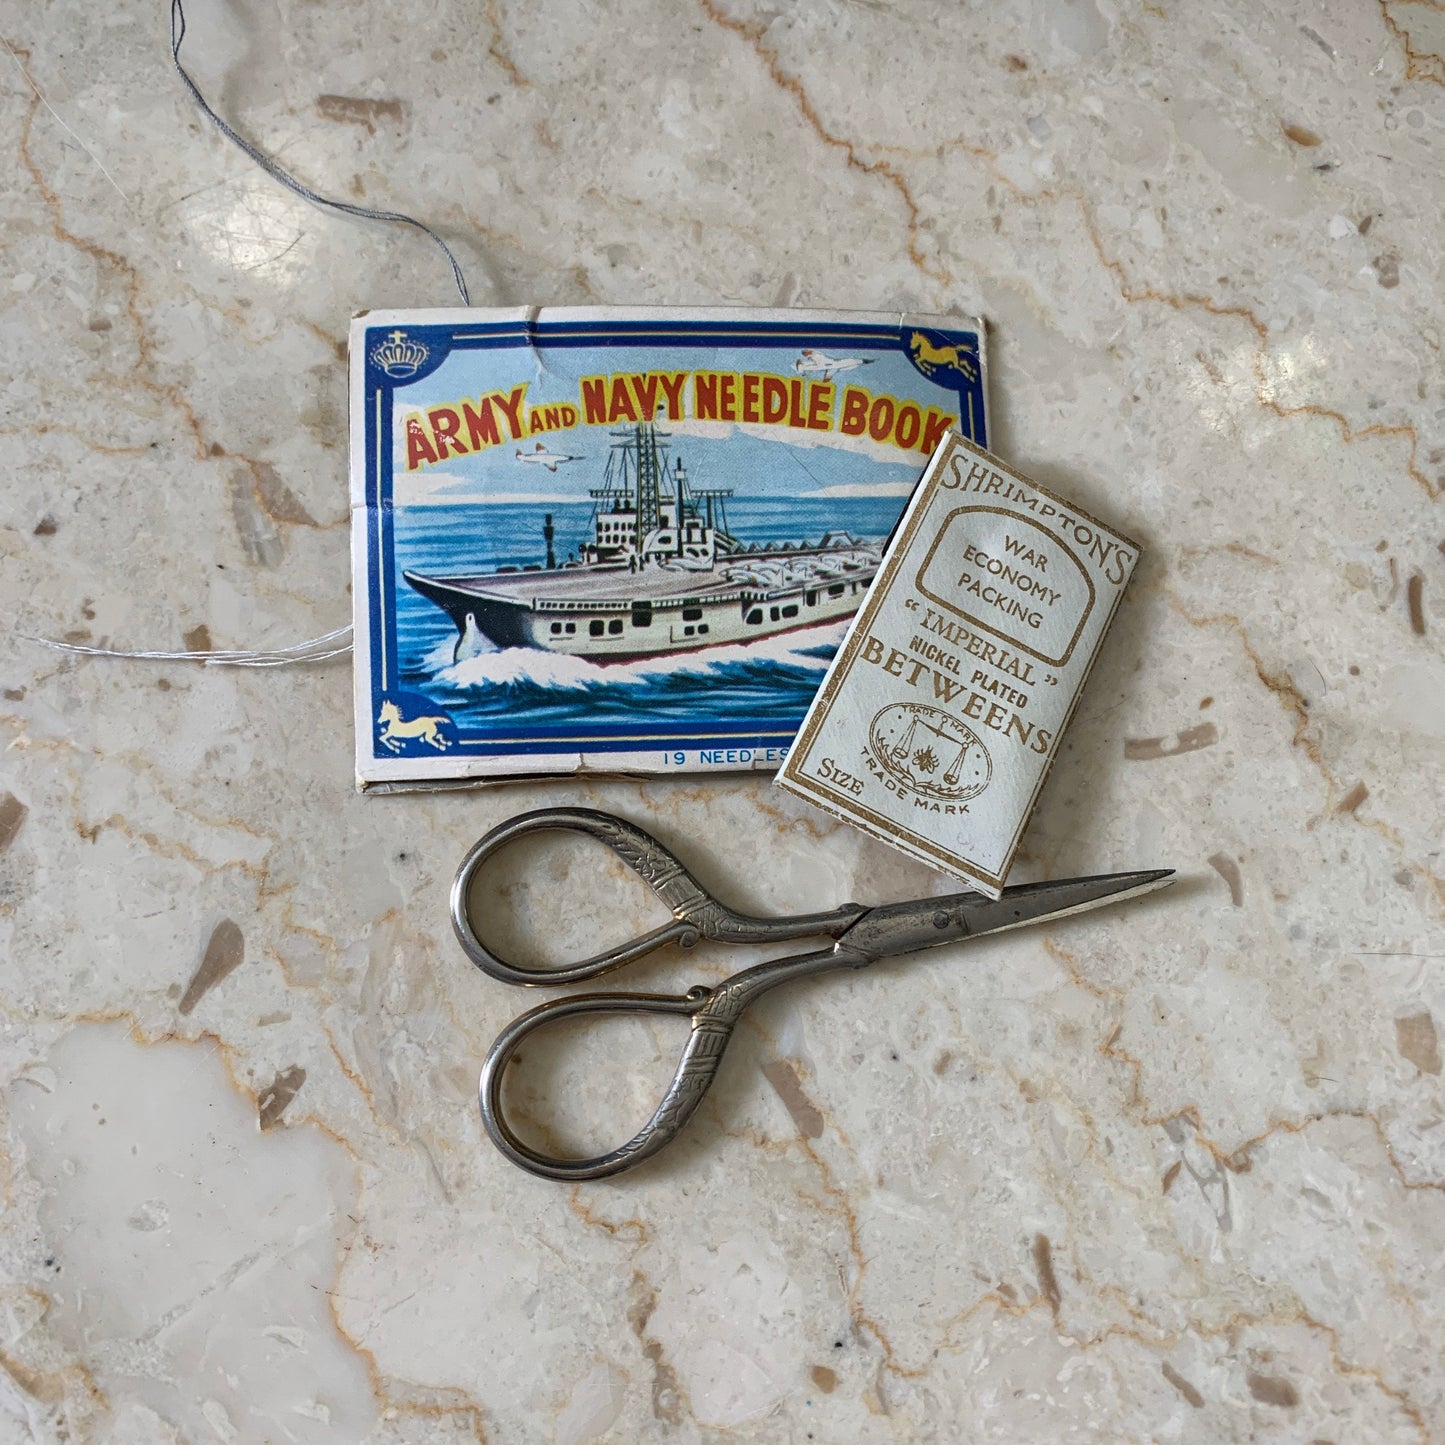 Vintage Sewing Notions Army Navy Needle Book Shrimptons Nickel Plated Betweens Made in Germany Sewing Scissors